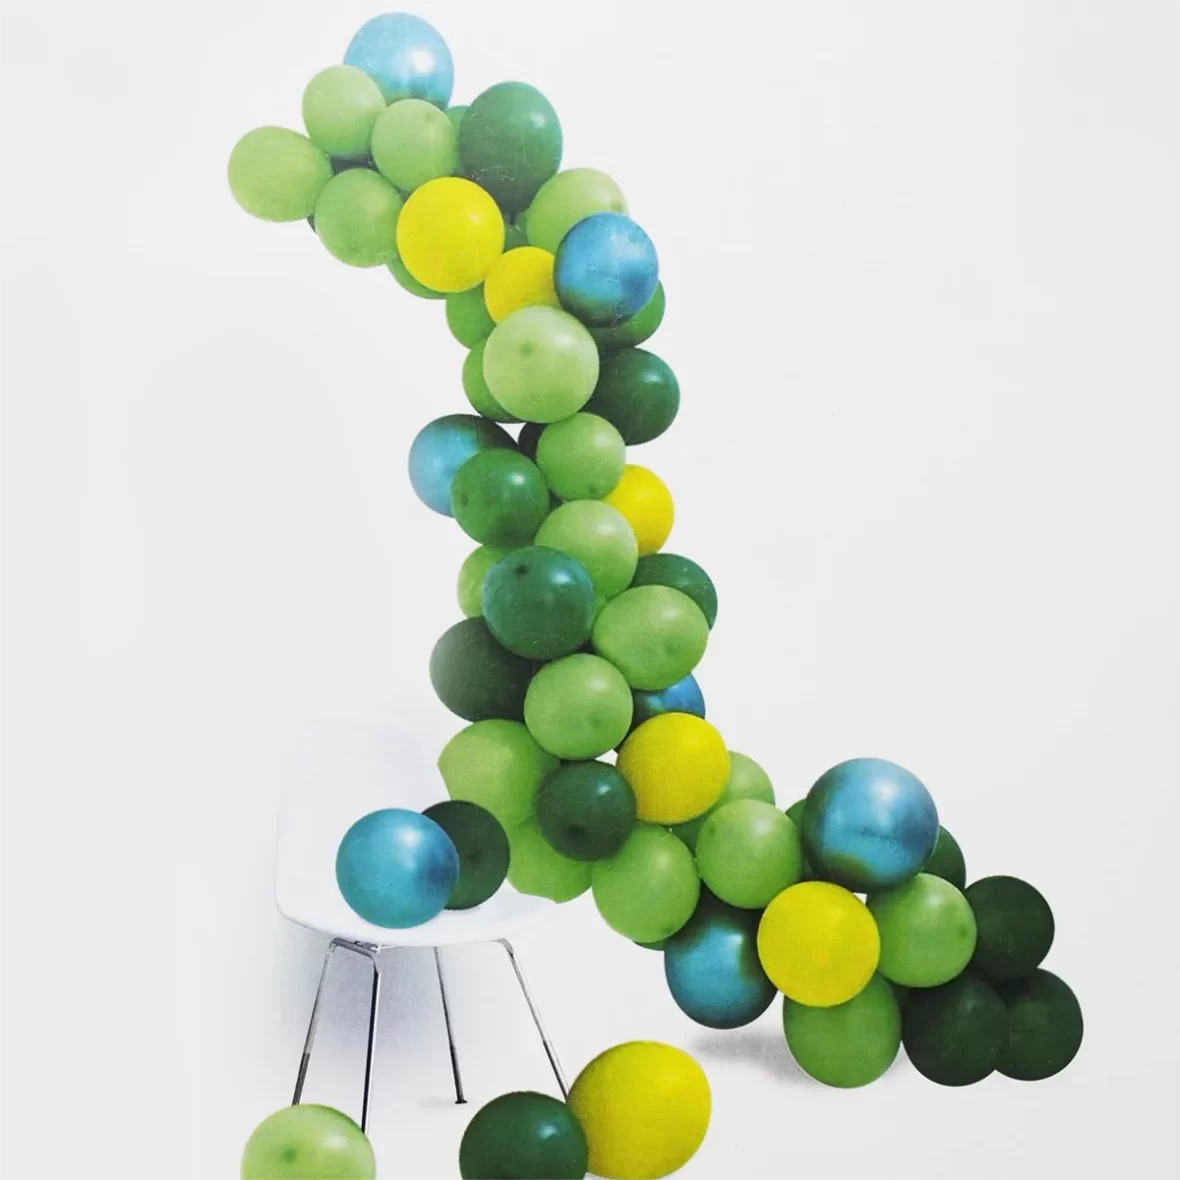 Arcada baloane in culori verde, galben, albastru